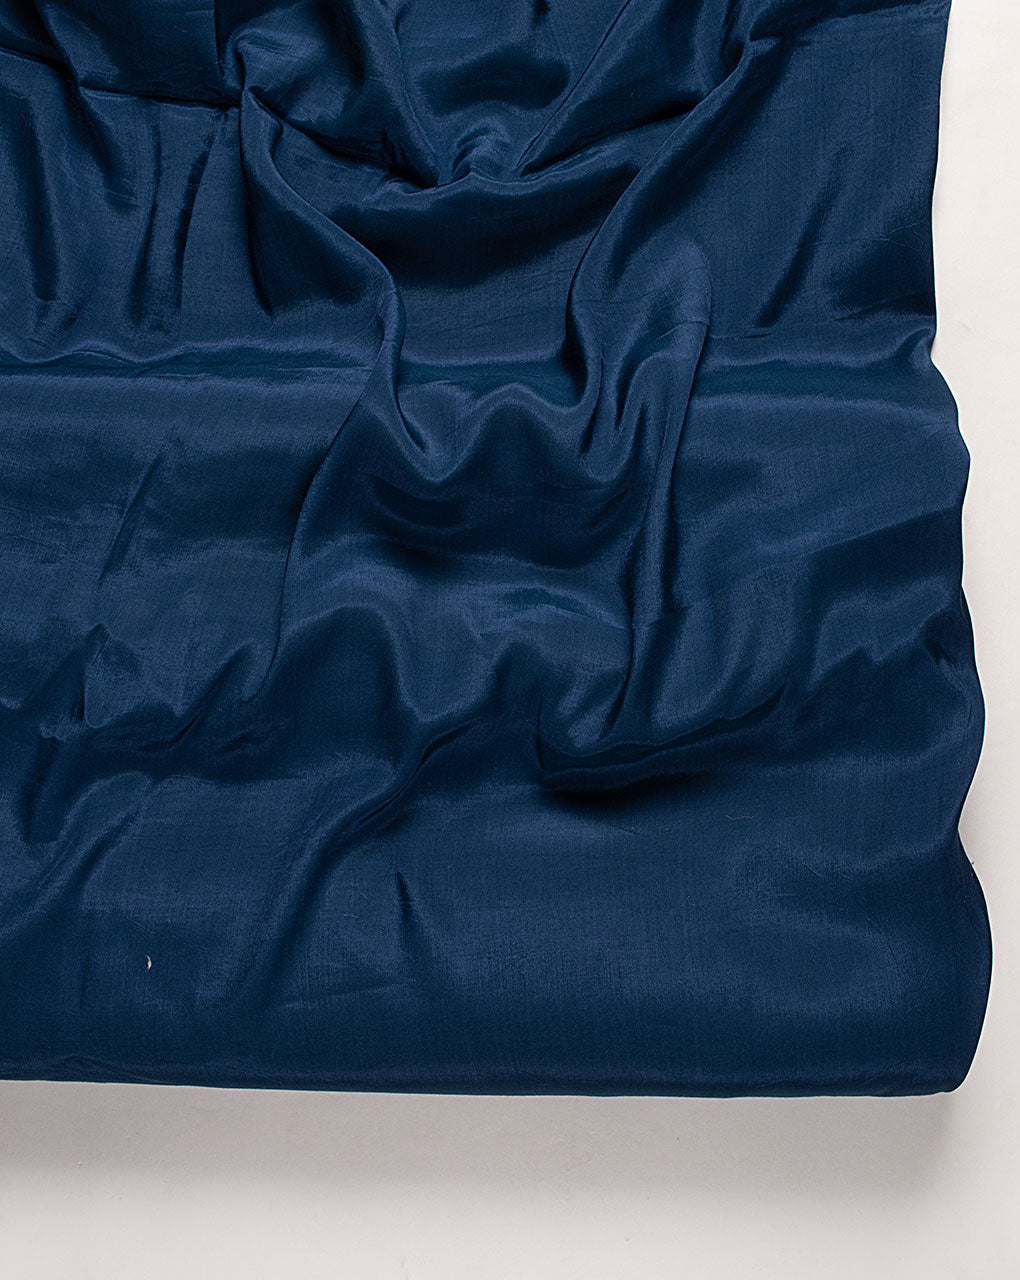 Blue Plain Viscose Santoon Fabric